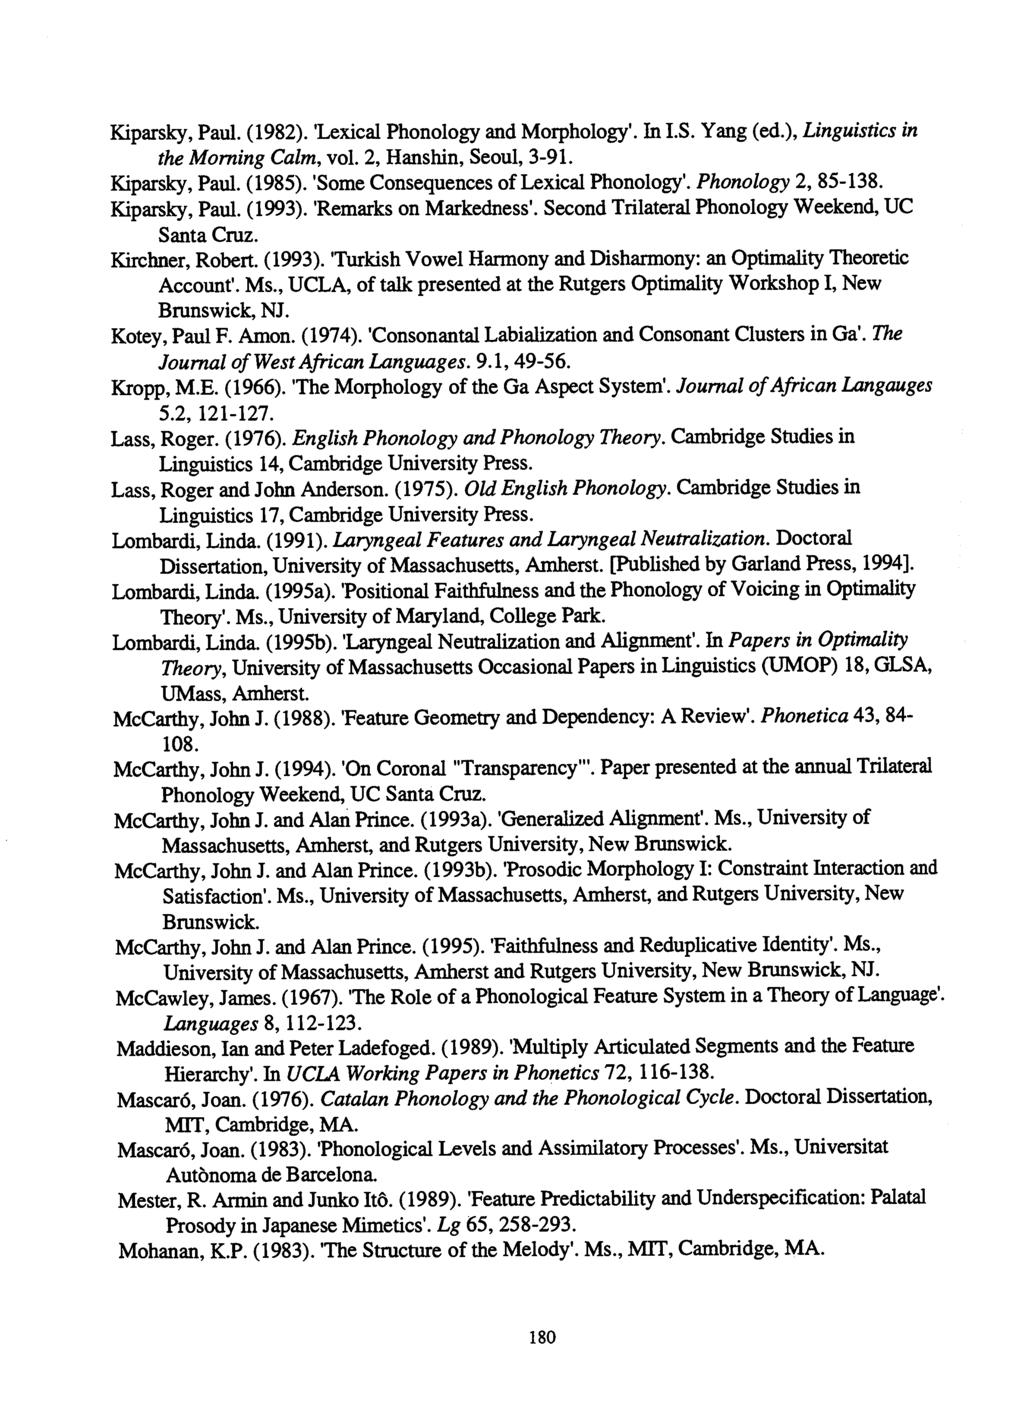 Kiparsky, Paul. (1982). 'Lexical Phonology and Morphology'. In I.S. Yang (ed.), Linguistics in the Morning Calm, vol. 2, Hanshin, Seoul, 3-91. Kiparsky, Paul. (1985).